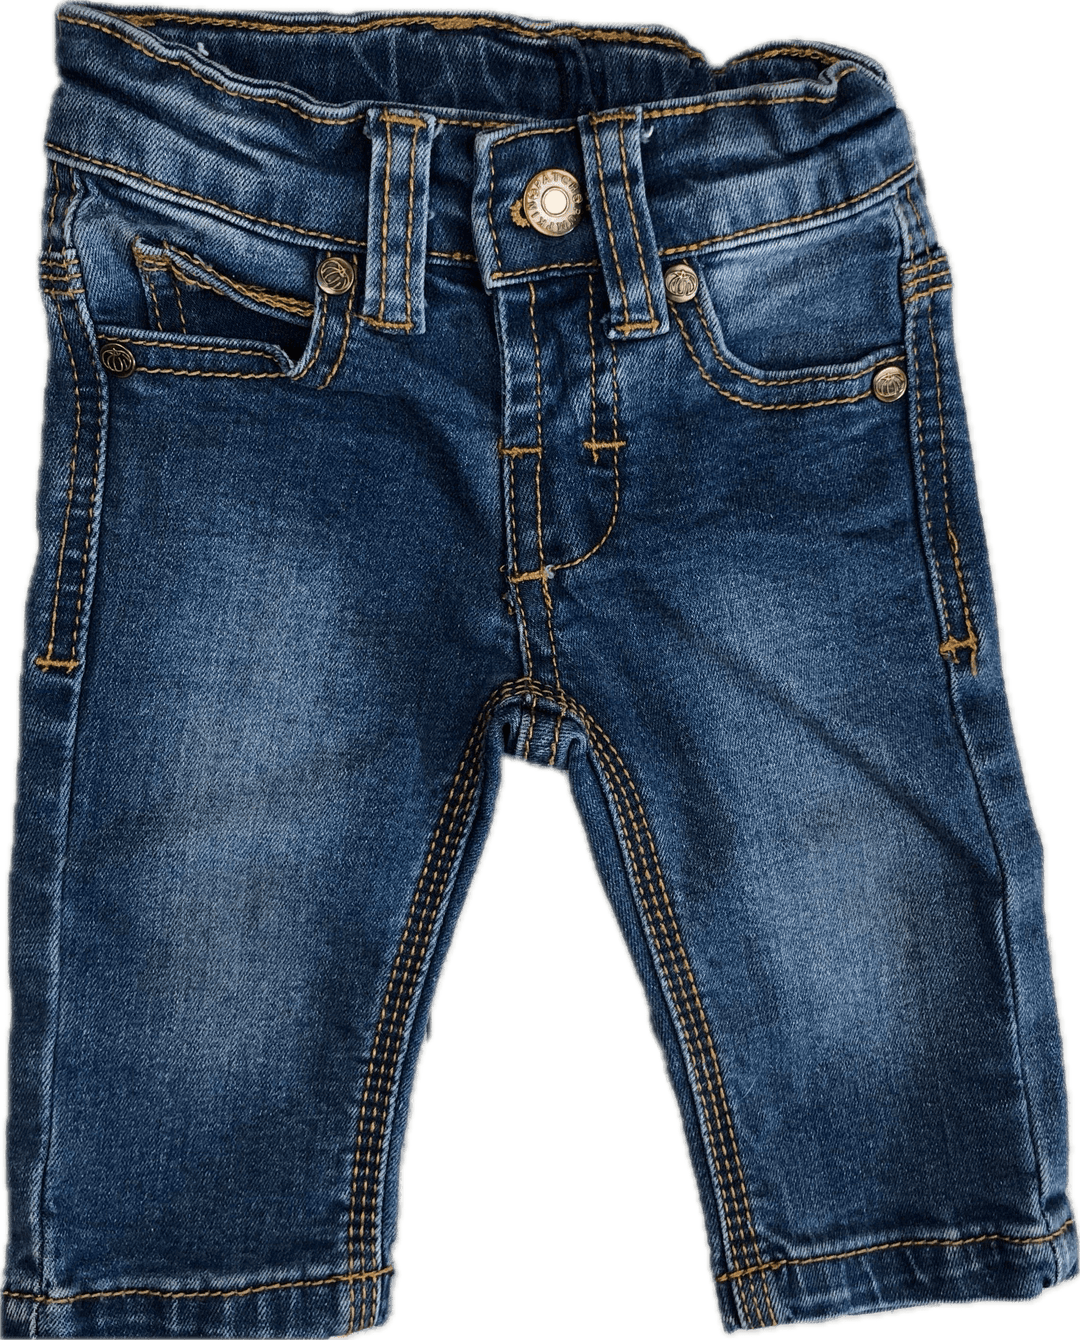 Pumpkin Patch Distressed Denim Baby Jeans - Size 0-3M - Jean Pool